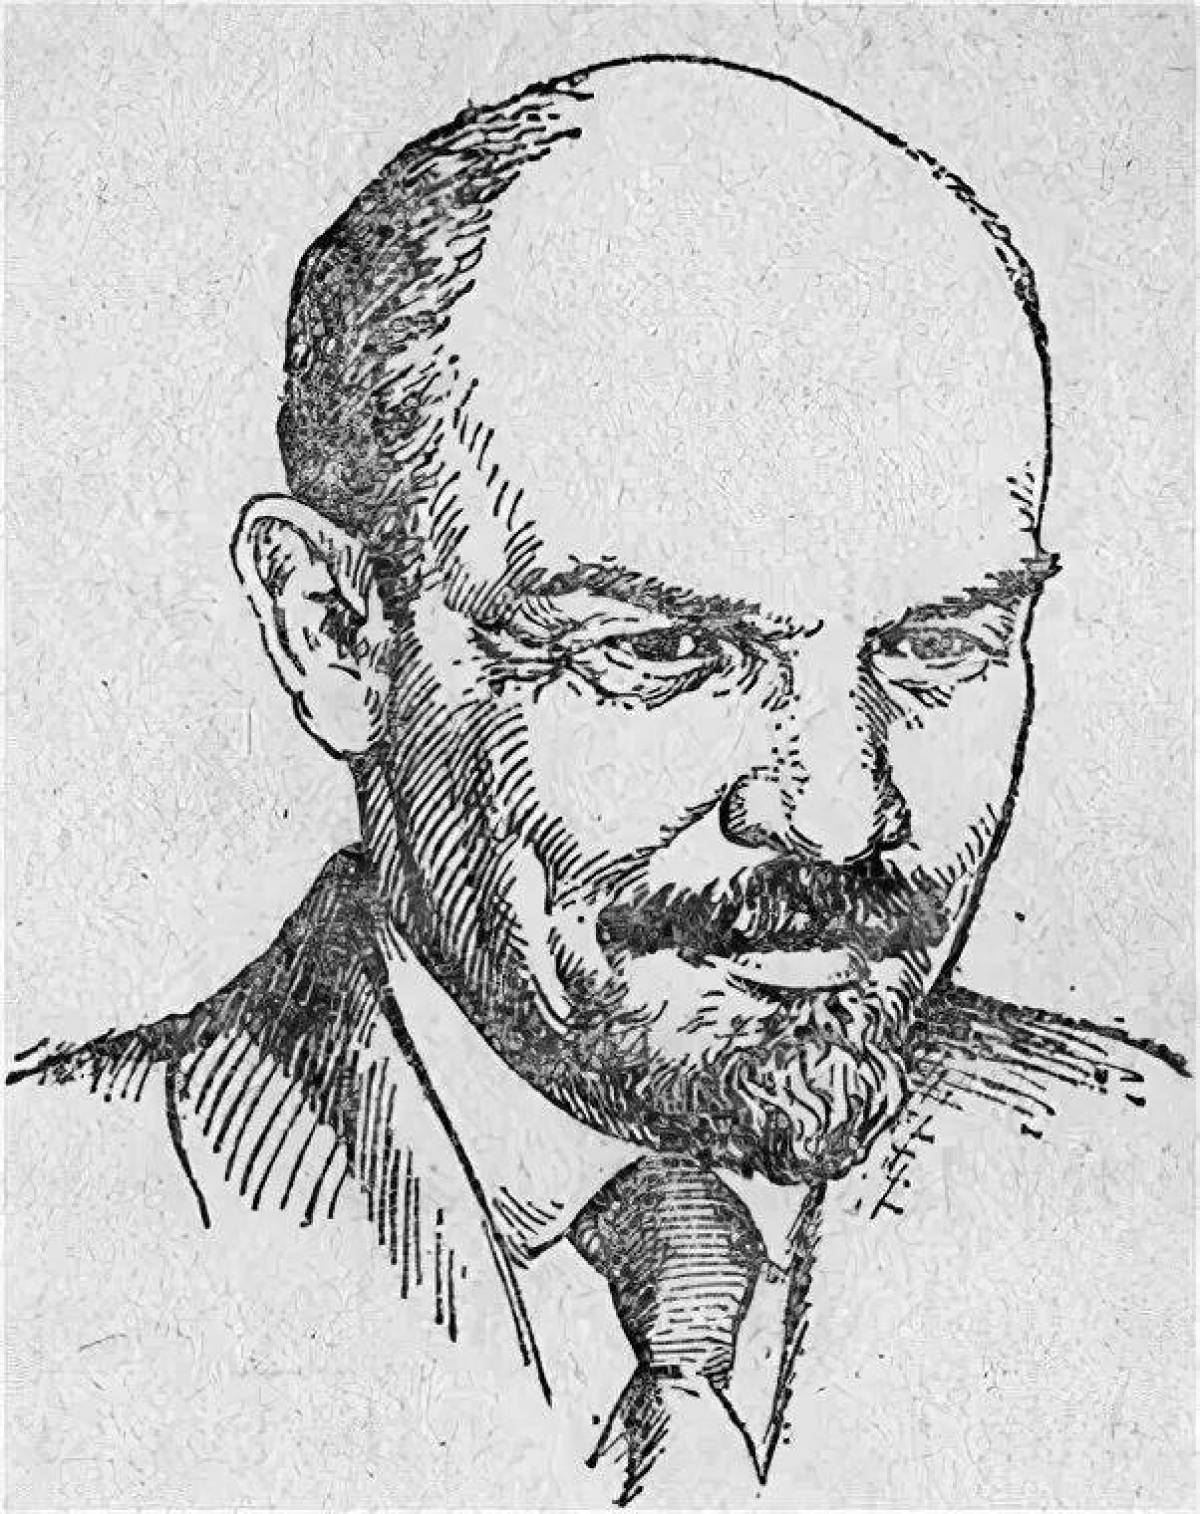 Lenin's coloring book